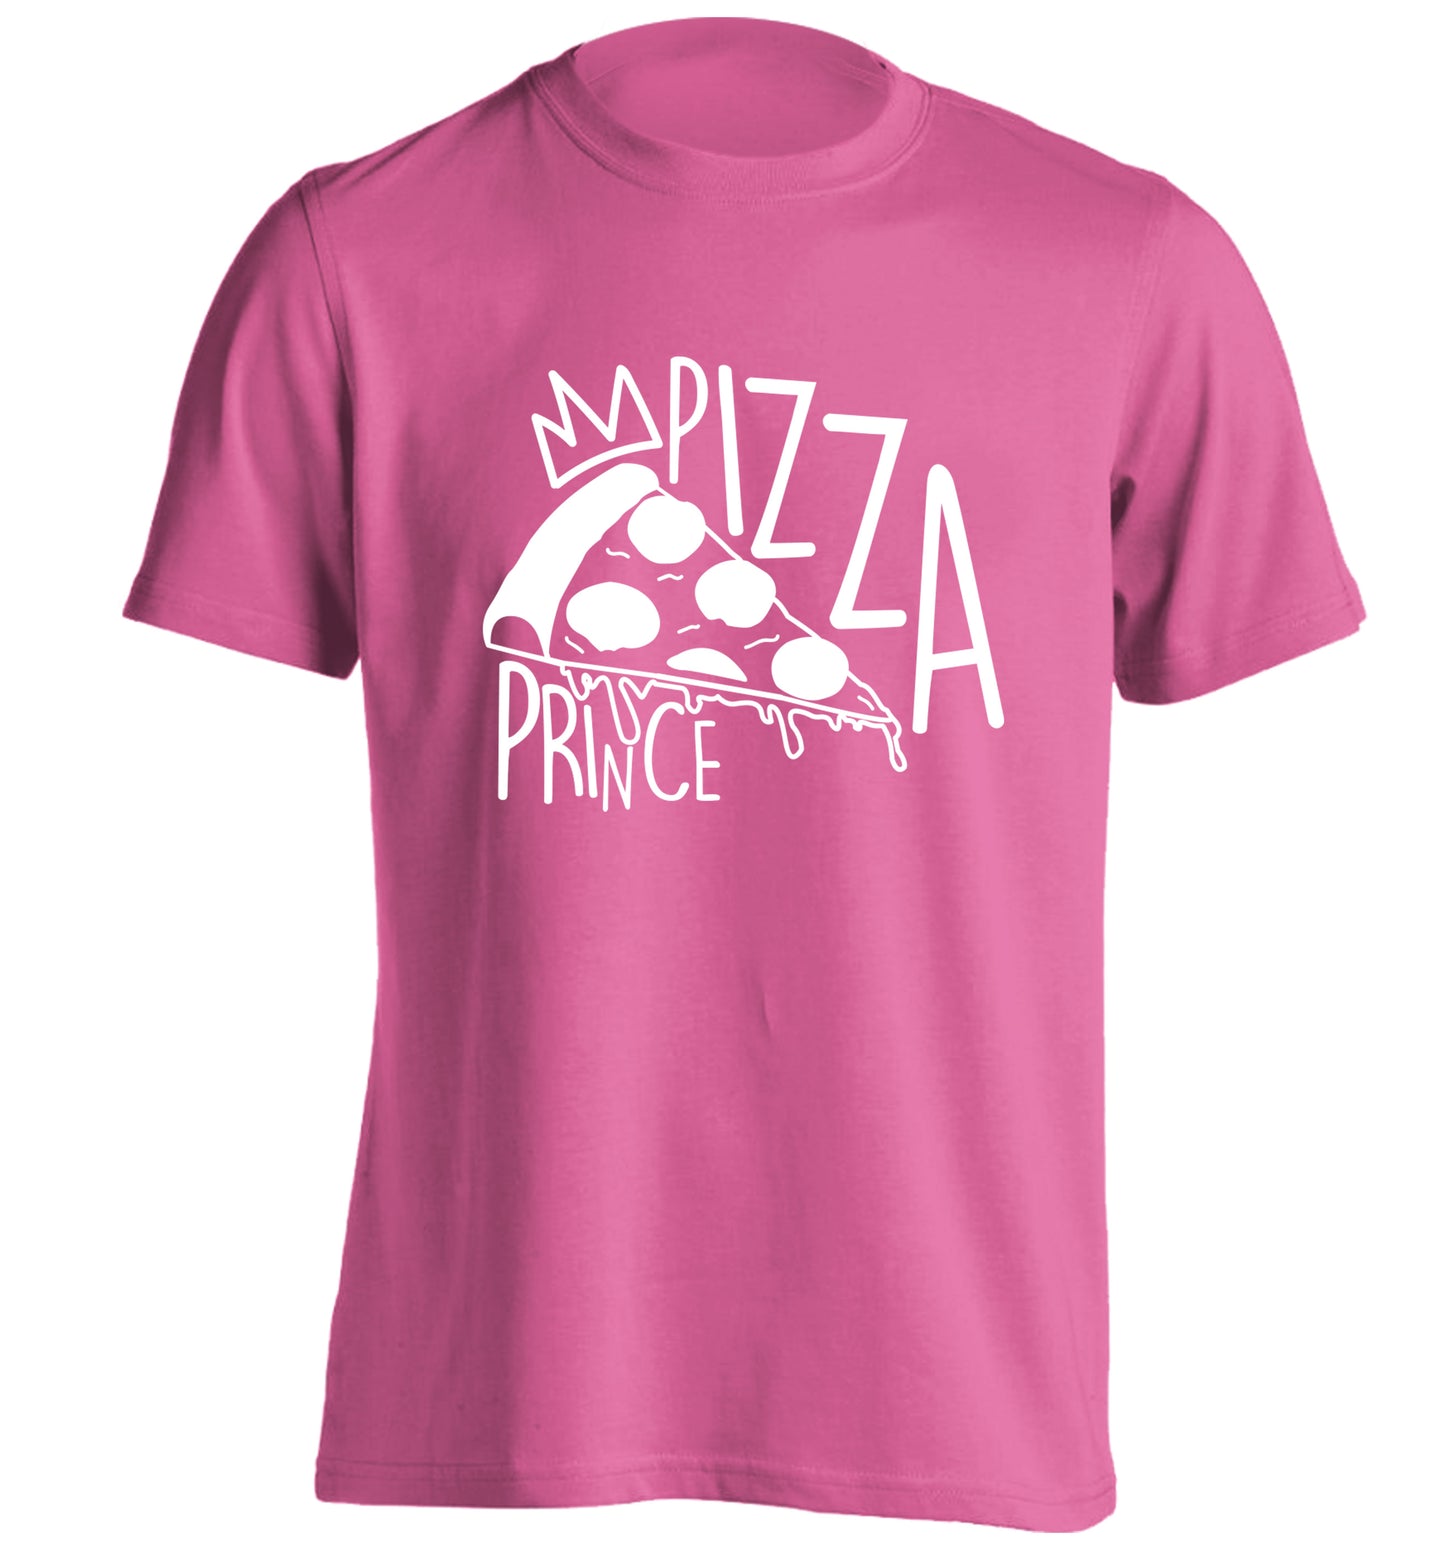 Pizza Prince adults unisex pink Tshirt 2XL